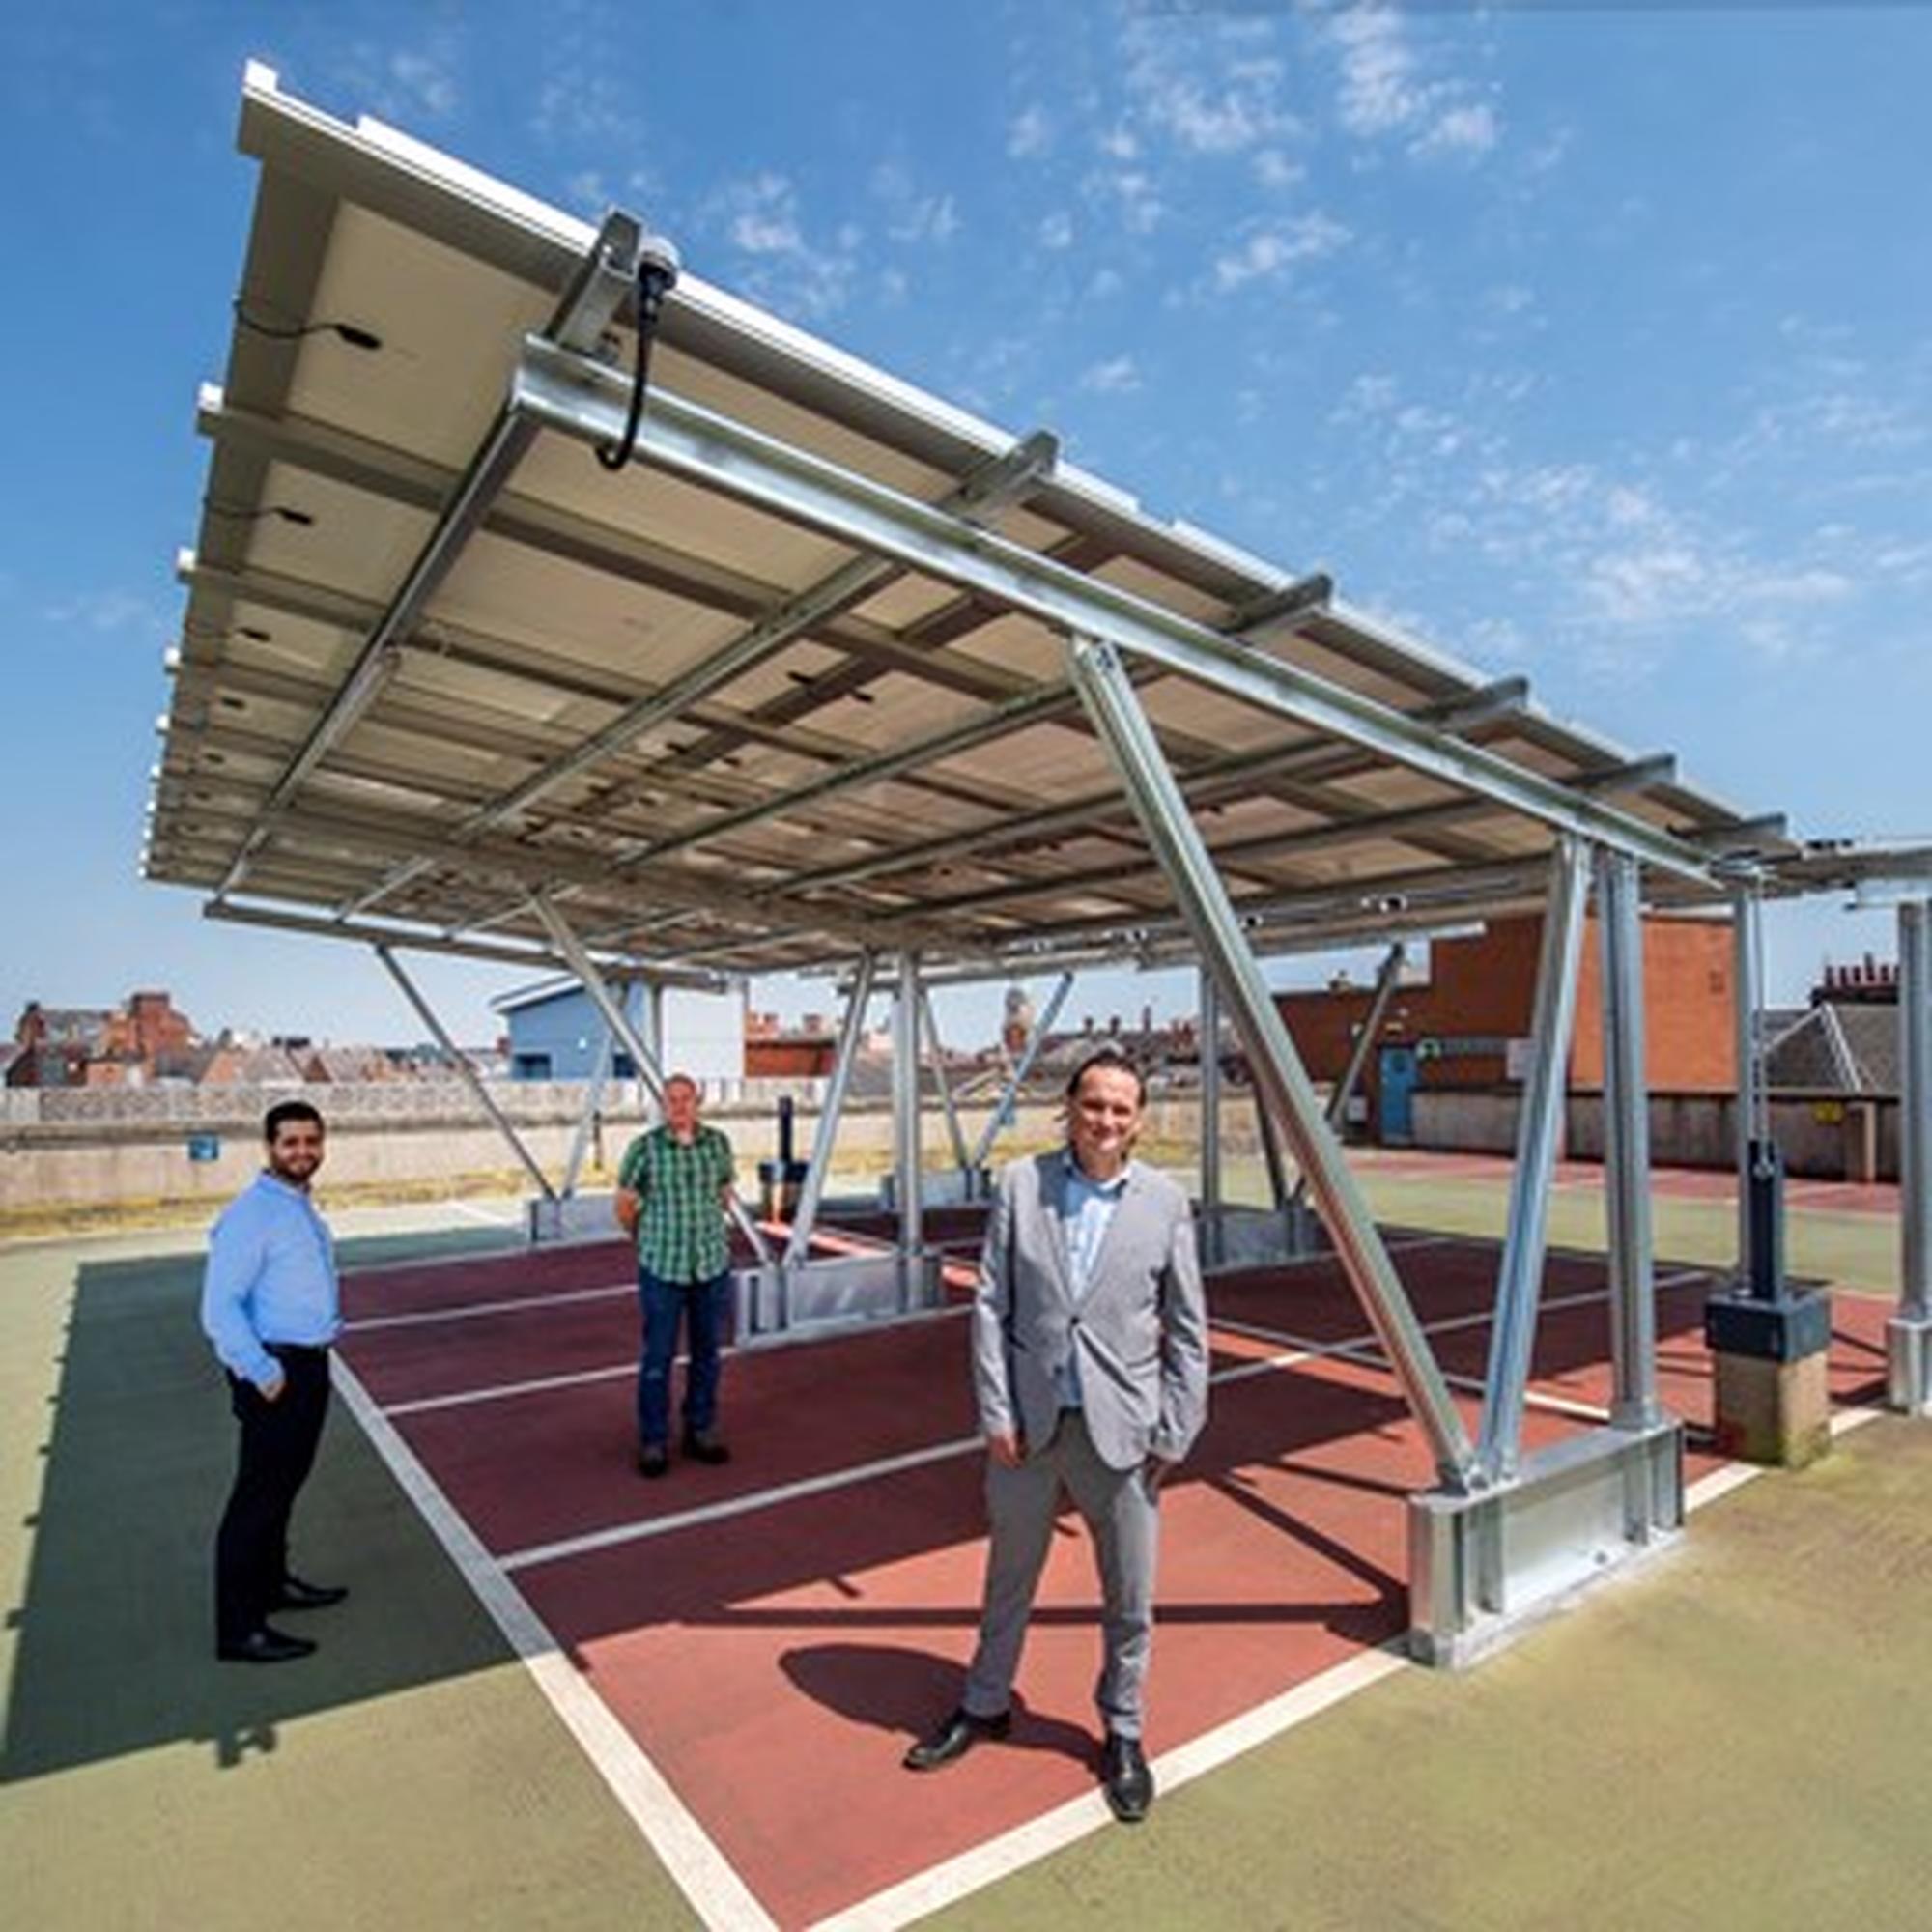 Leicester activates solar car park canopies